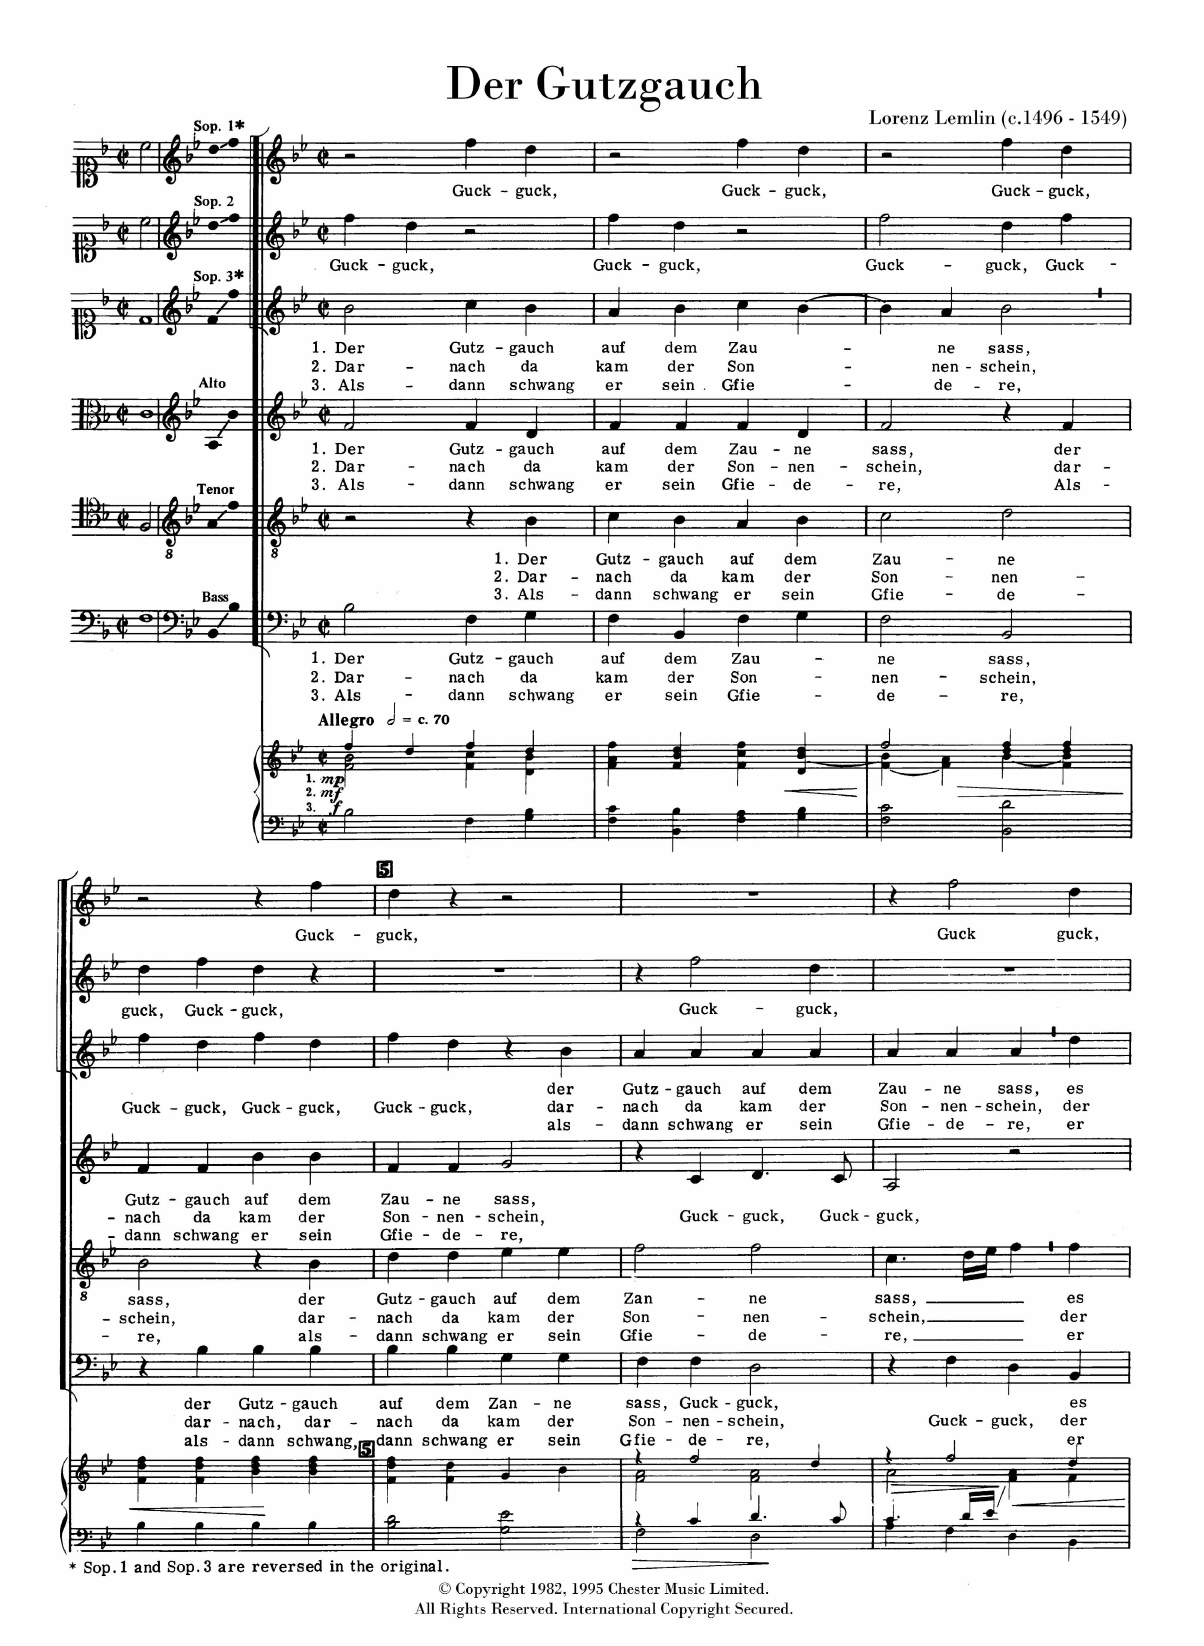 Lorenz Lemlin Der Gutzgauch Sheet Music Notes & Chords for SATB Choir - Download or Print PDF